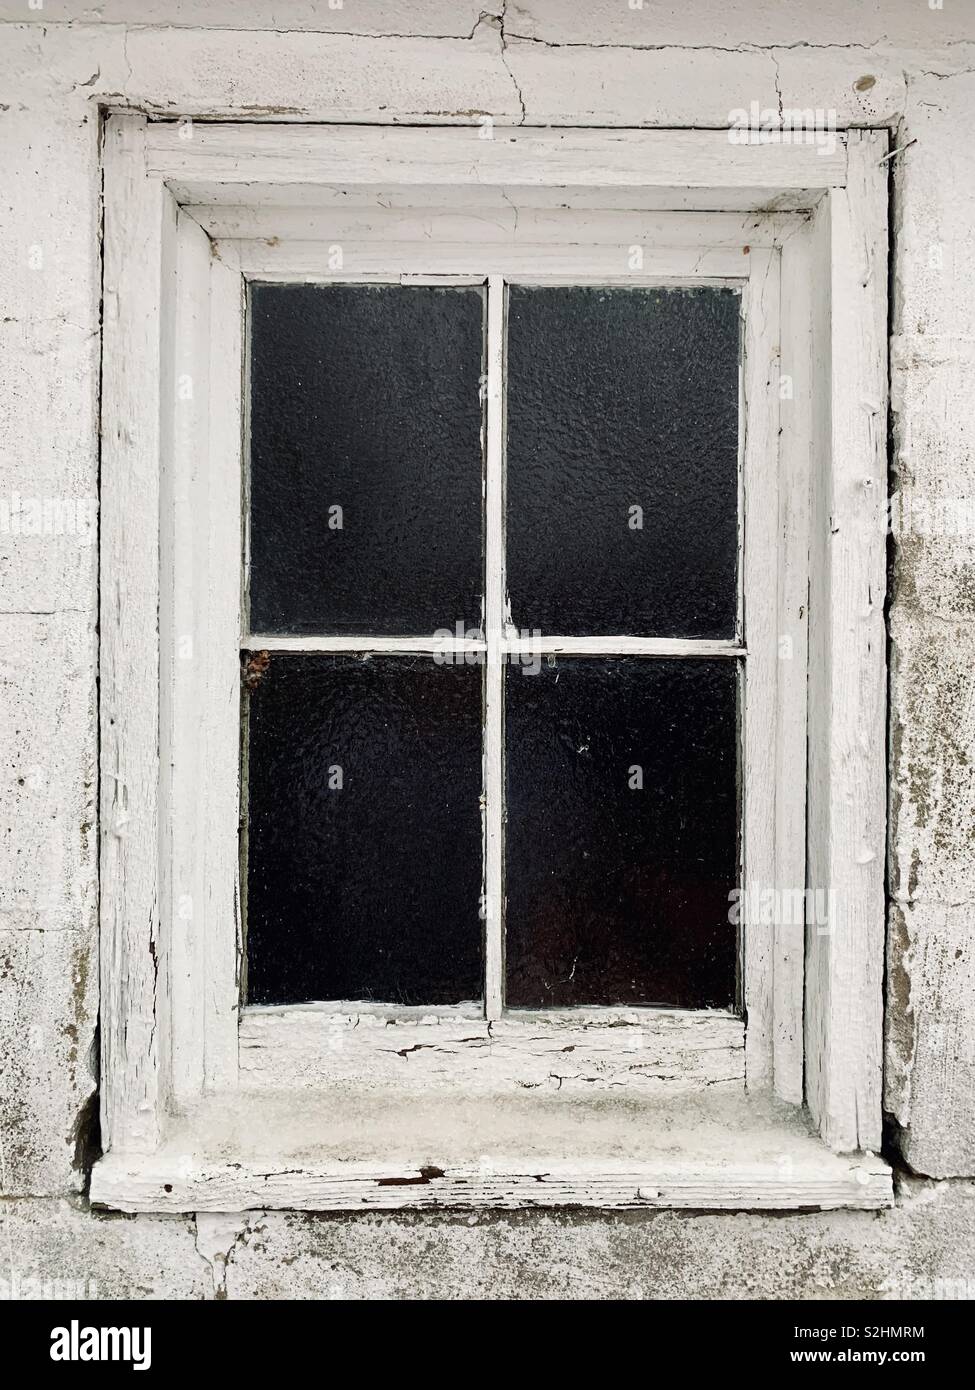 Window with peeling white paint Stock Photo